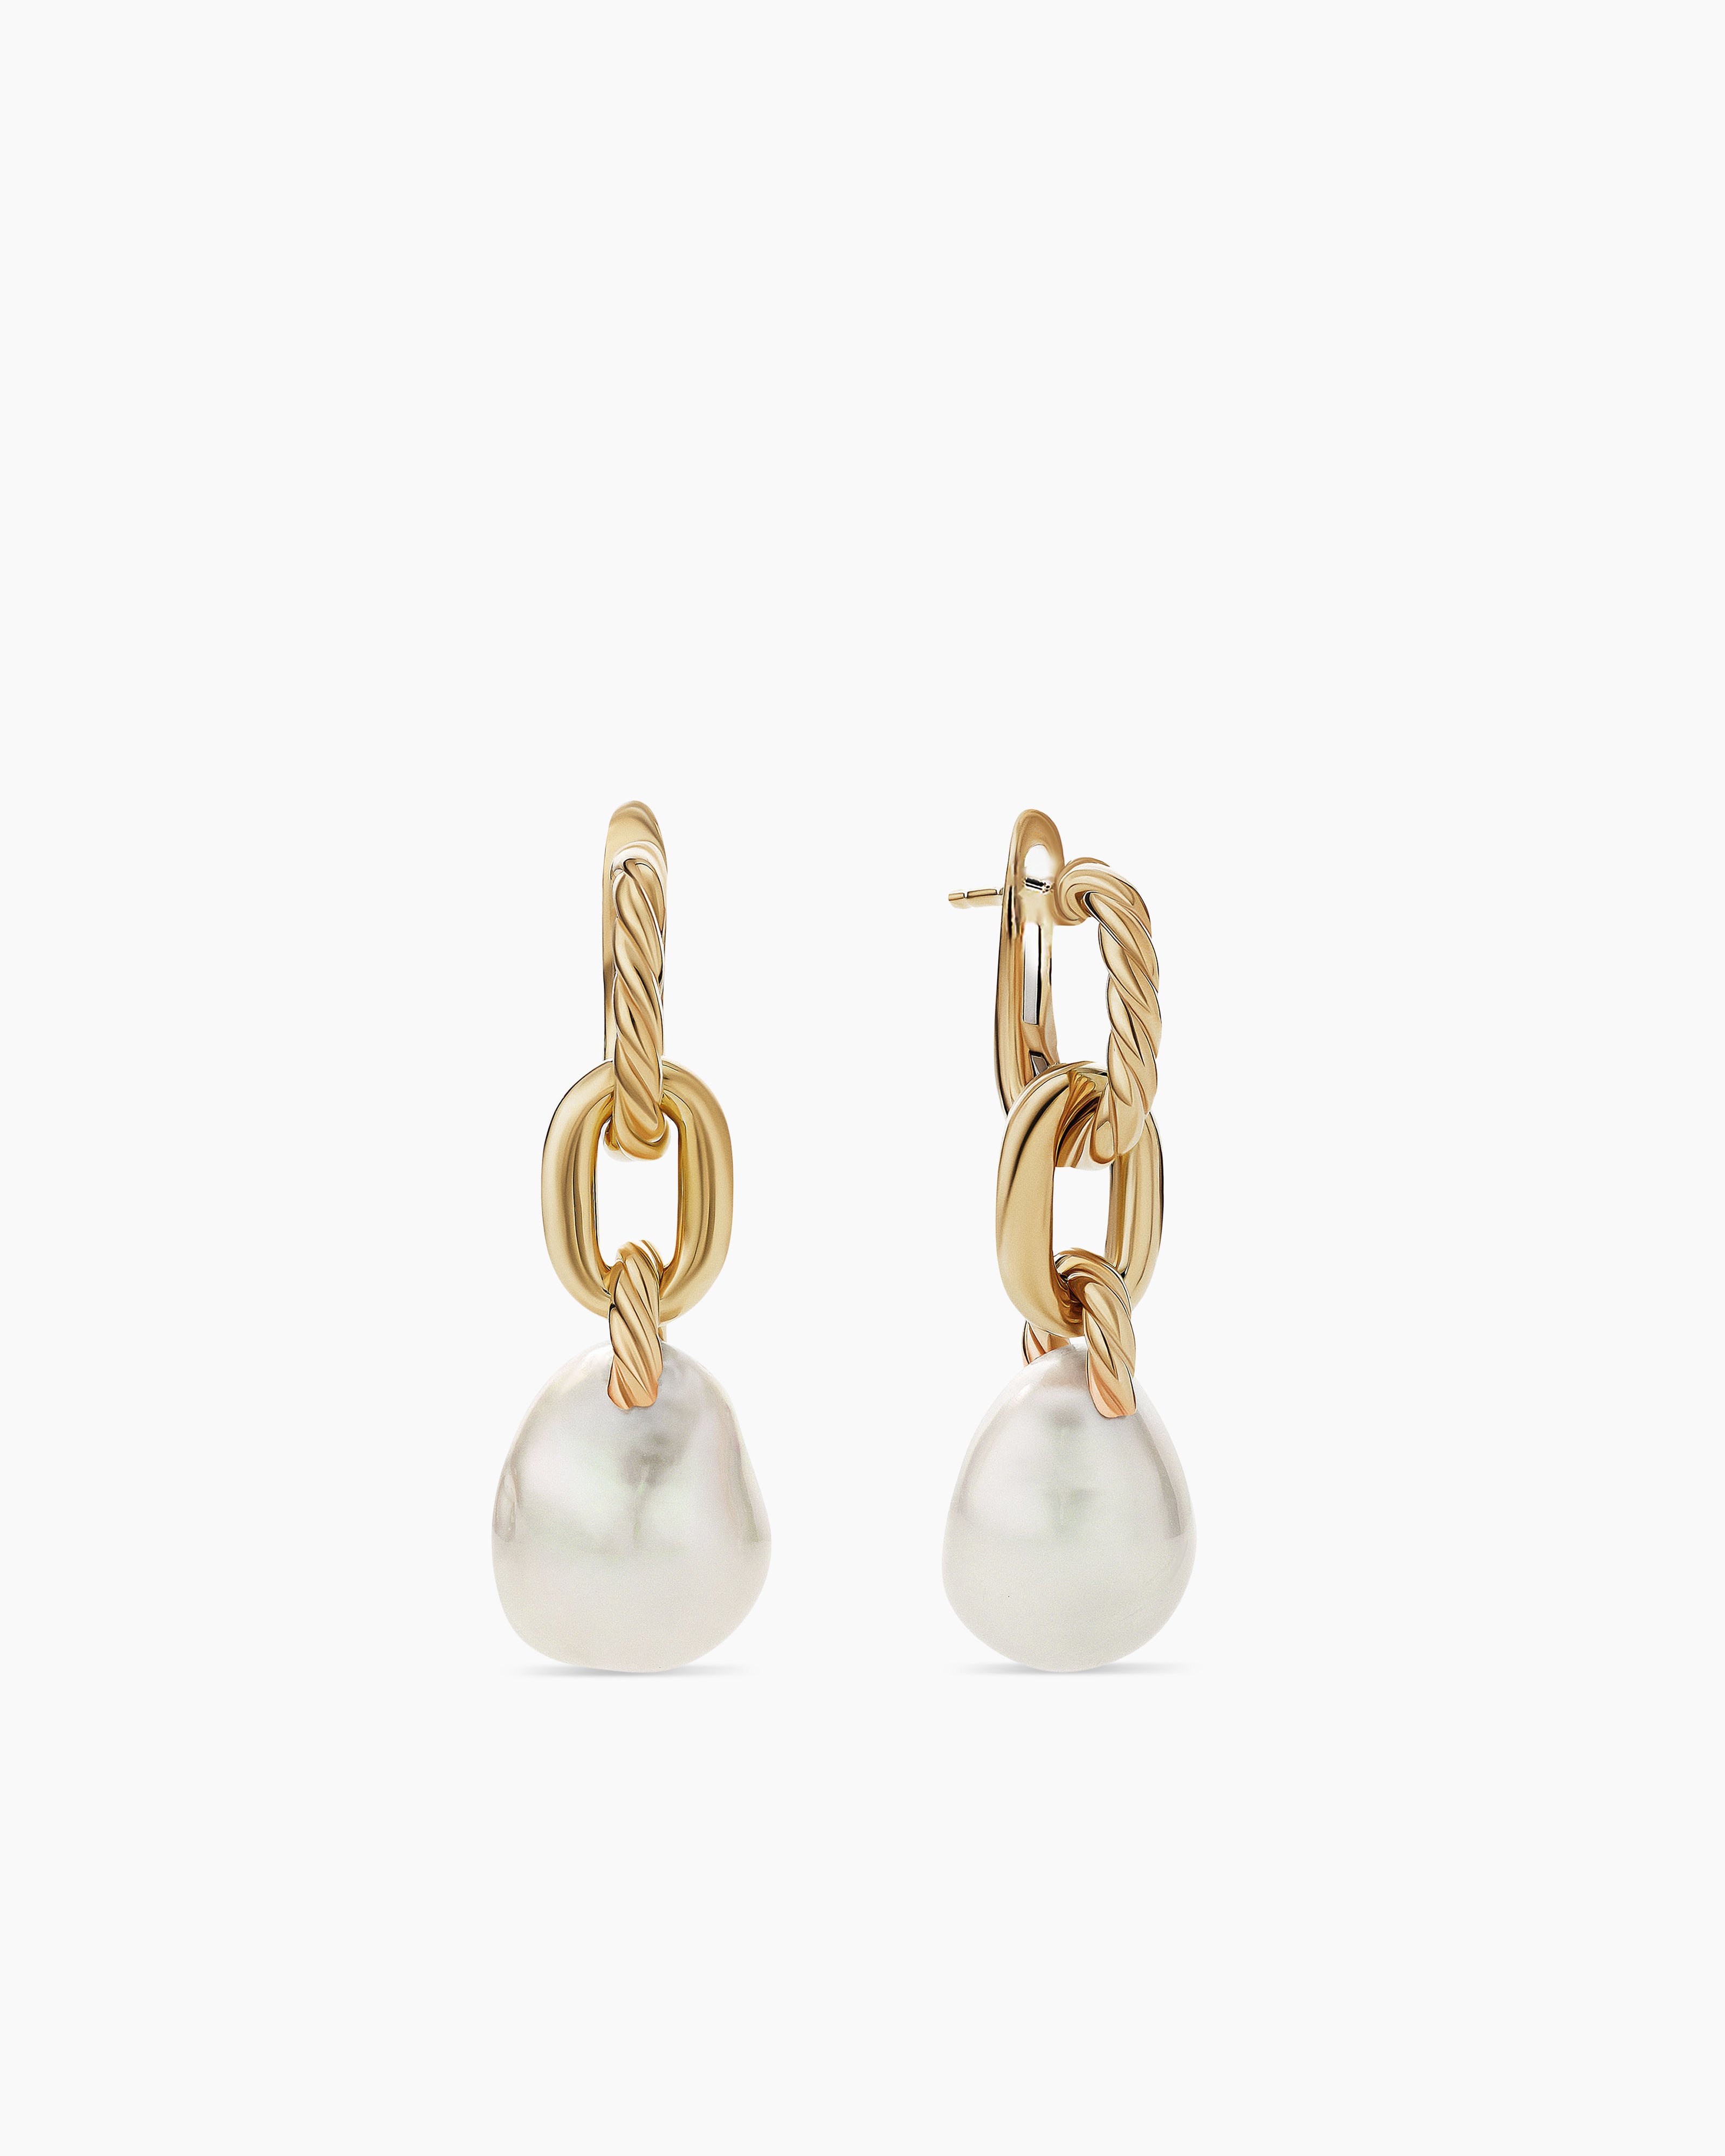 Yellow gold pearl earrings, Pearl dangle earrings at ₹1950 | Azilaa